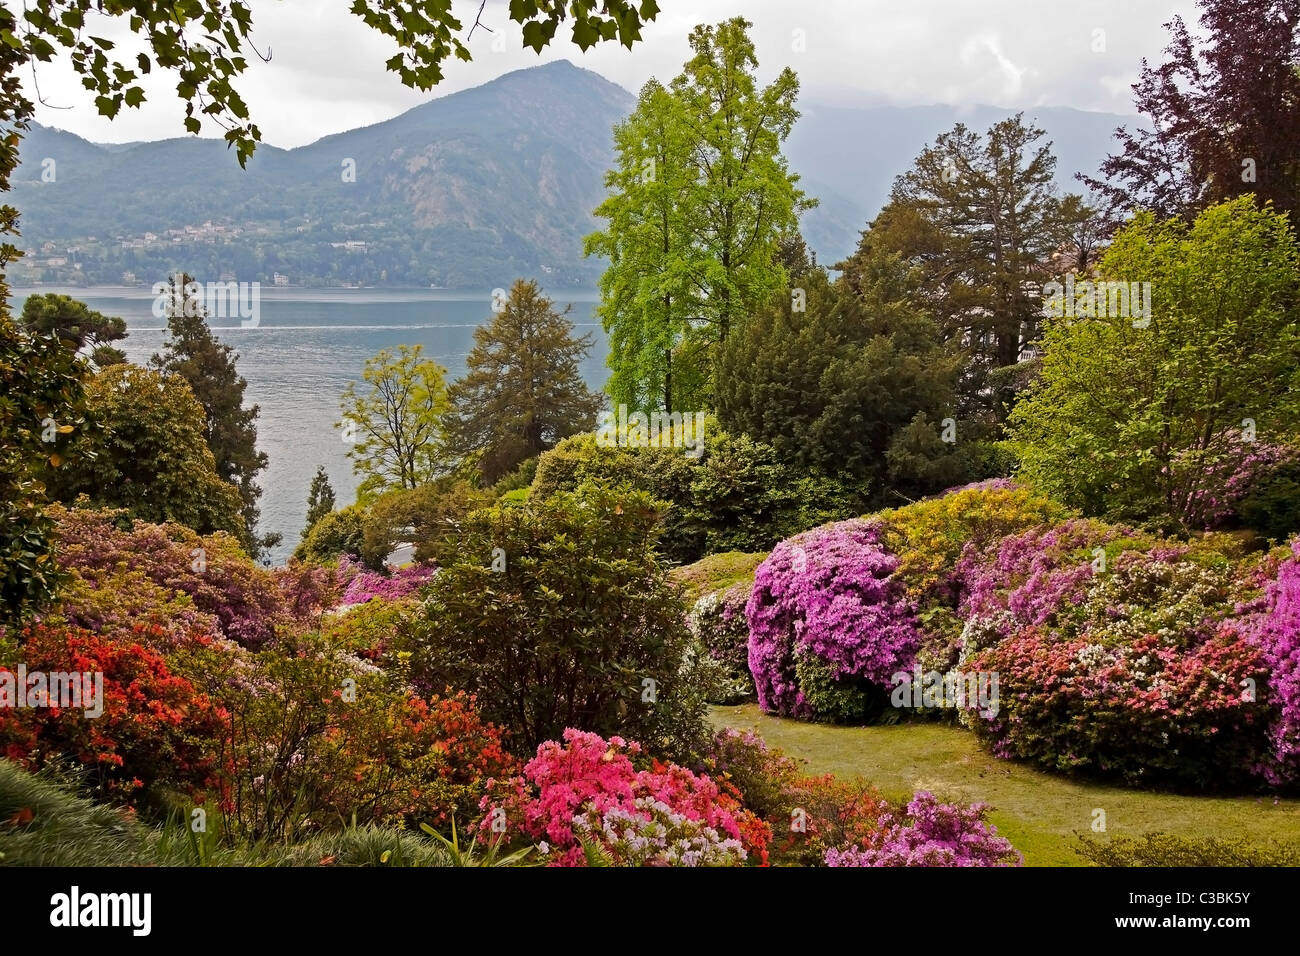 Villa Carlotta und der berühmte botanische Garten Foto de stock